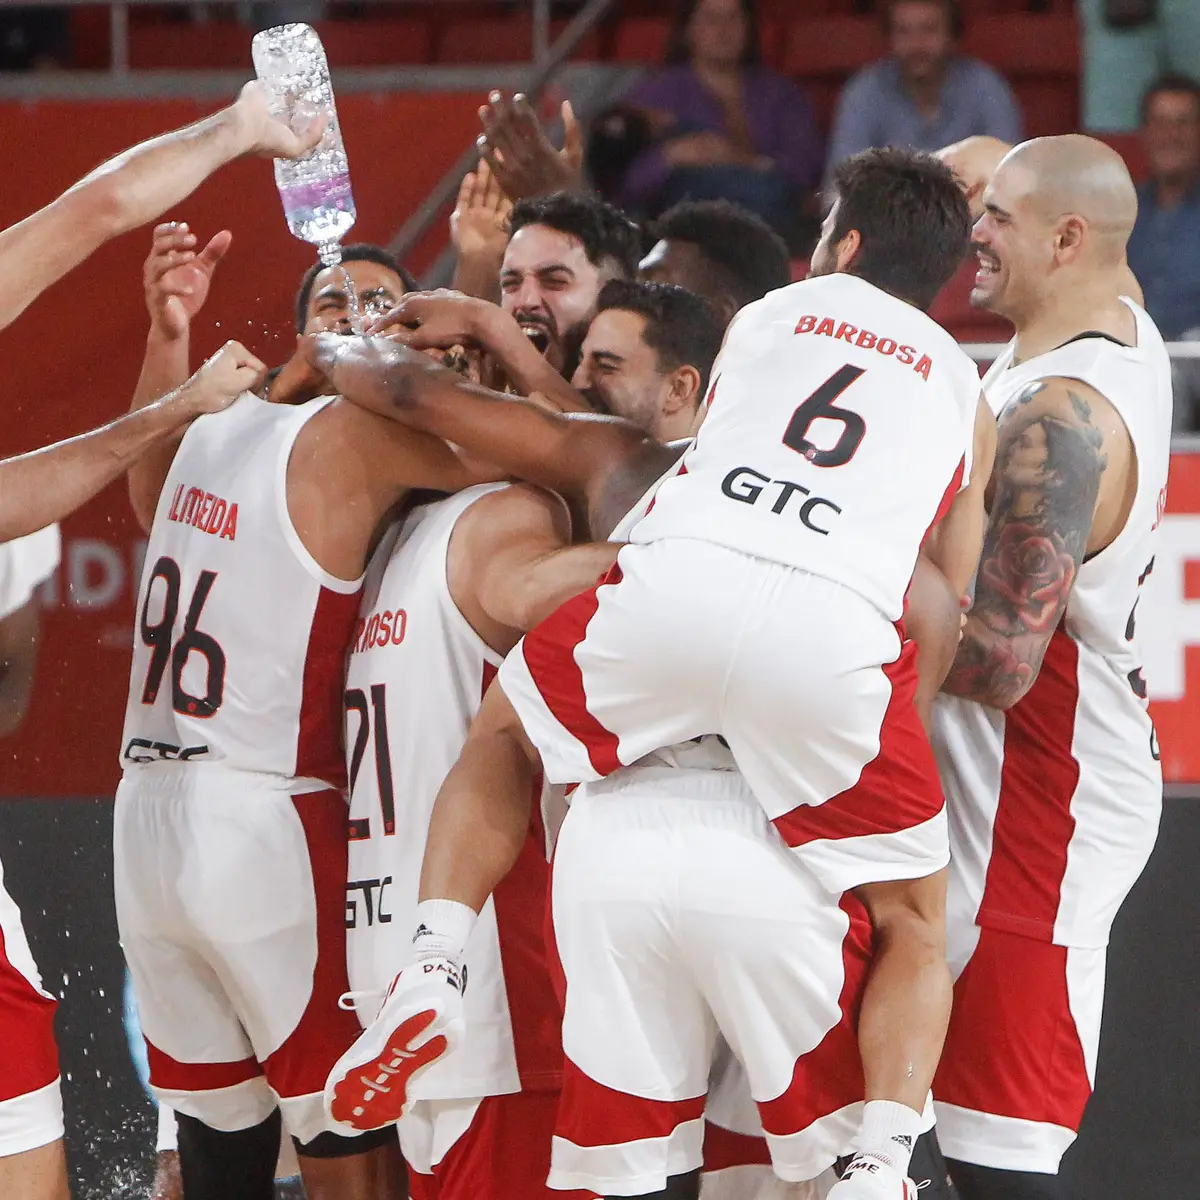 Basquetebol: FIBA suspende jogos de equipas israelitas, Benfica e Sporting  afetados